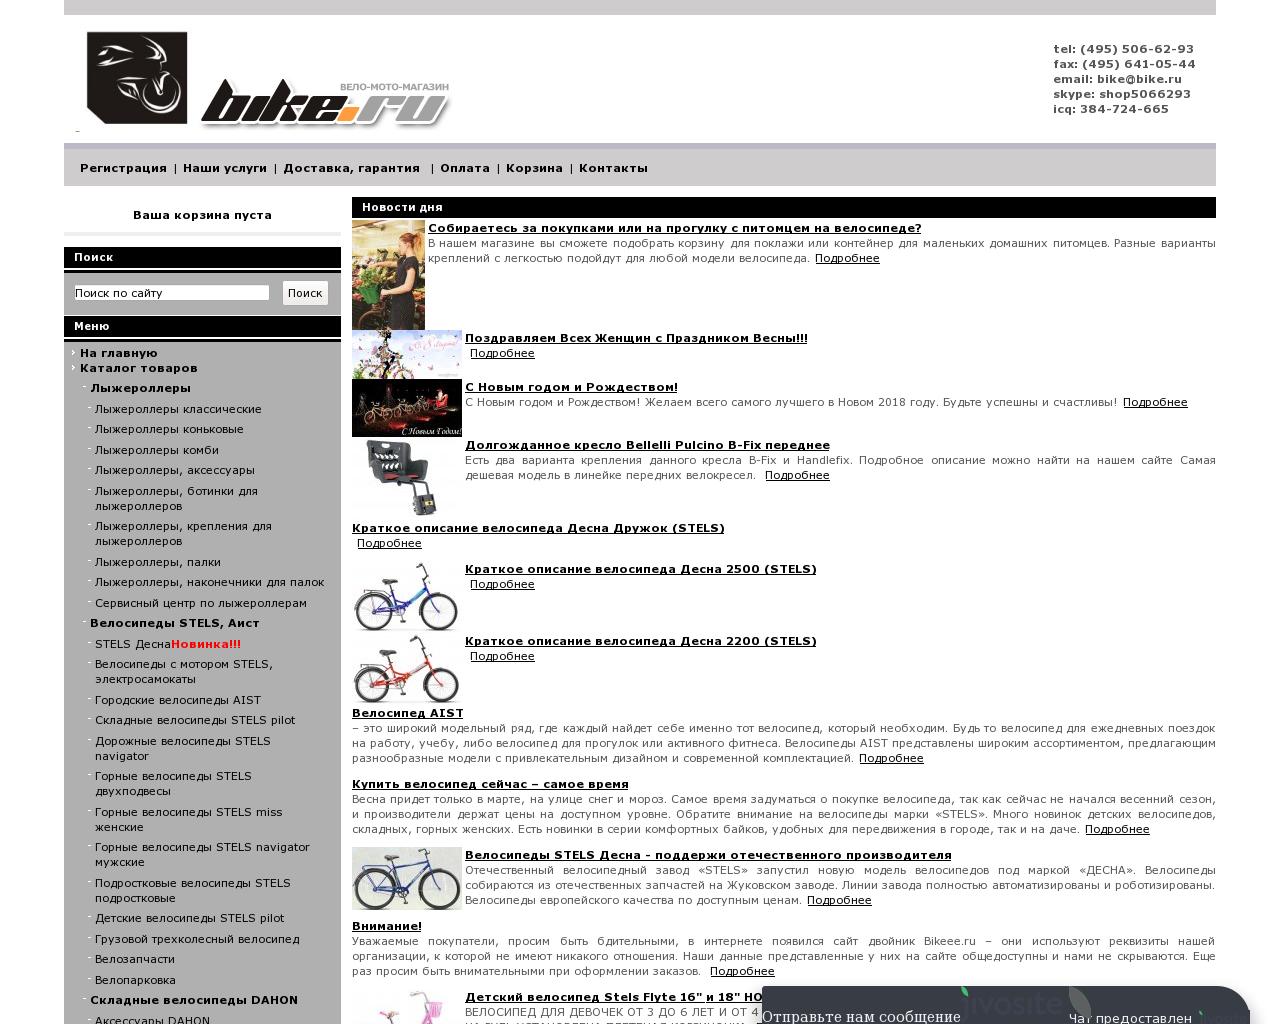 Изображение сайта bike.ru в разрешении 1280x1024